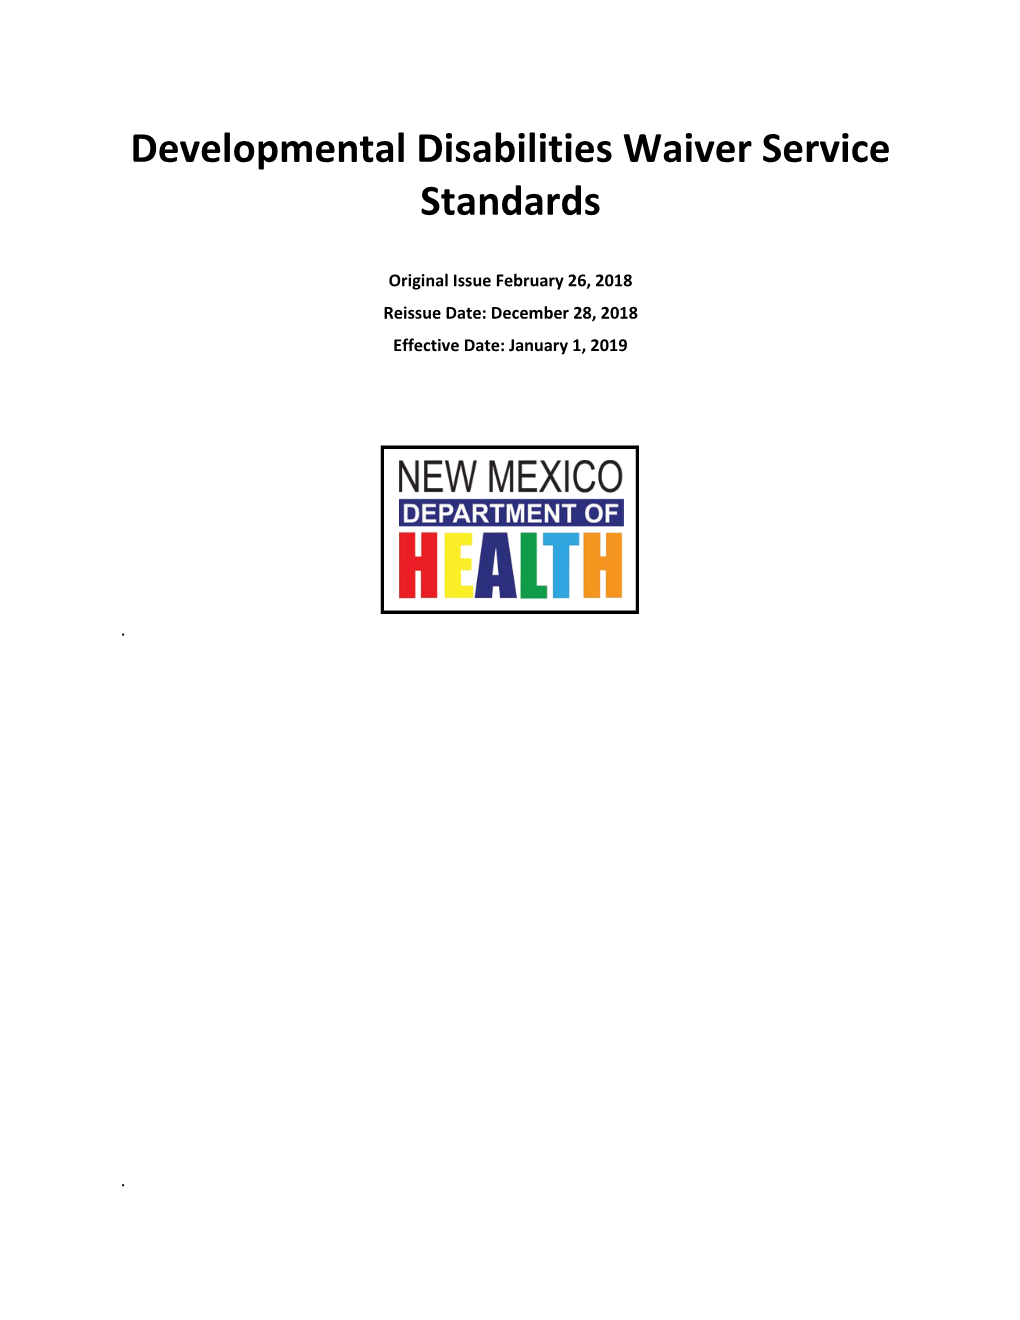 Developmental Disabilities Waiver Service Standards